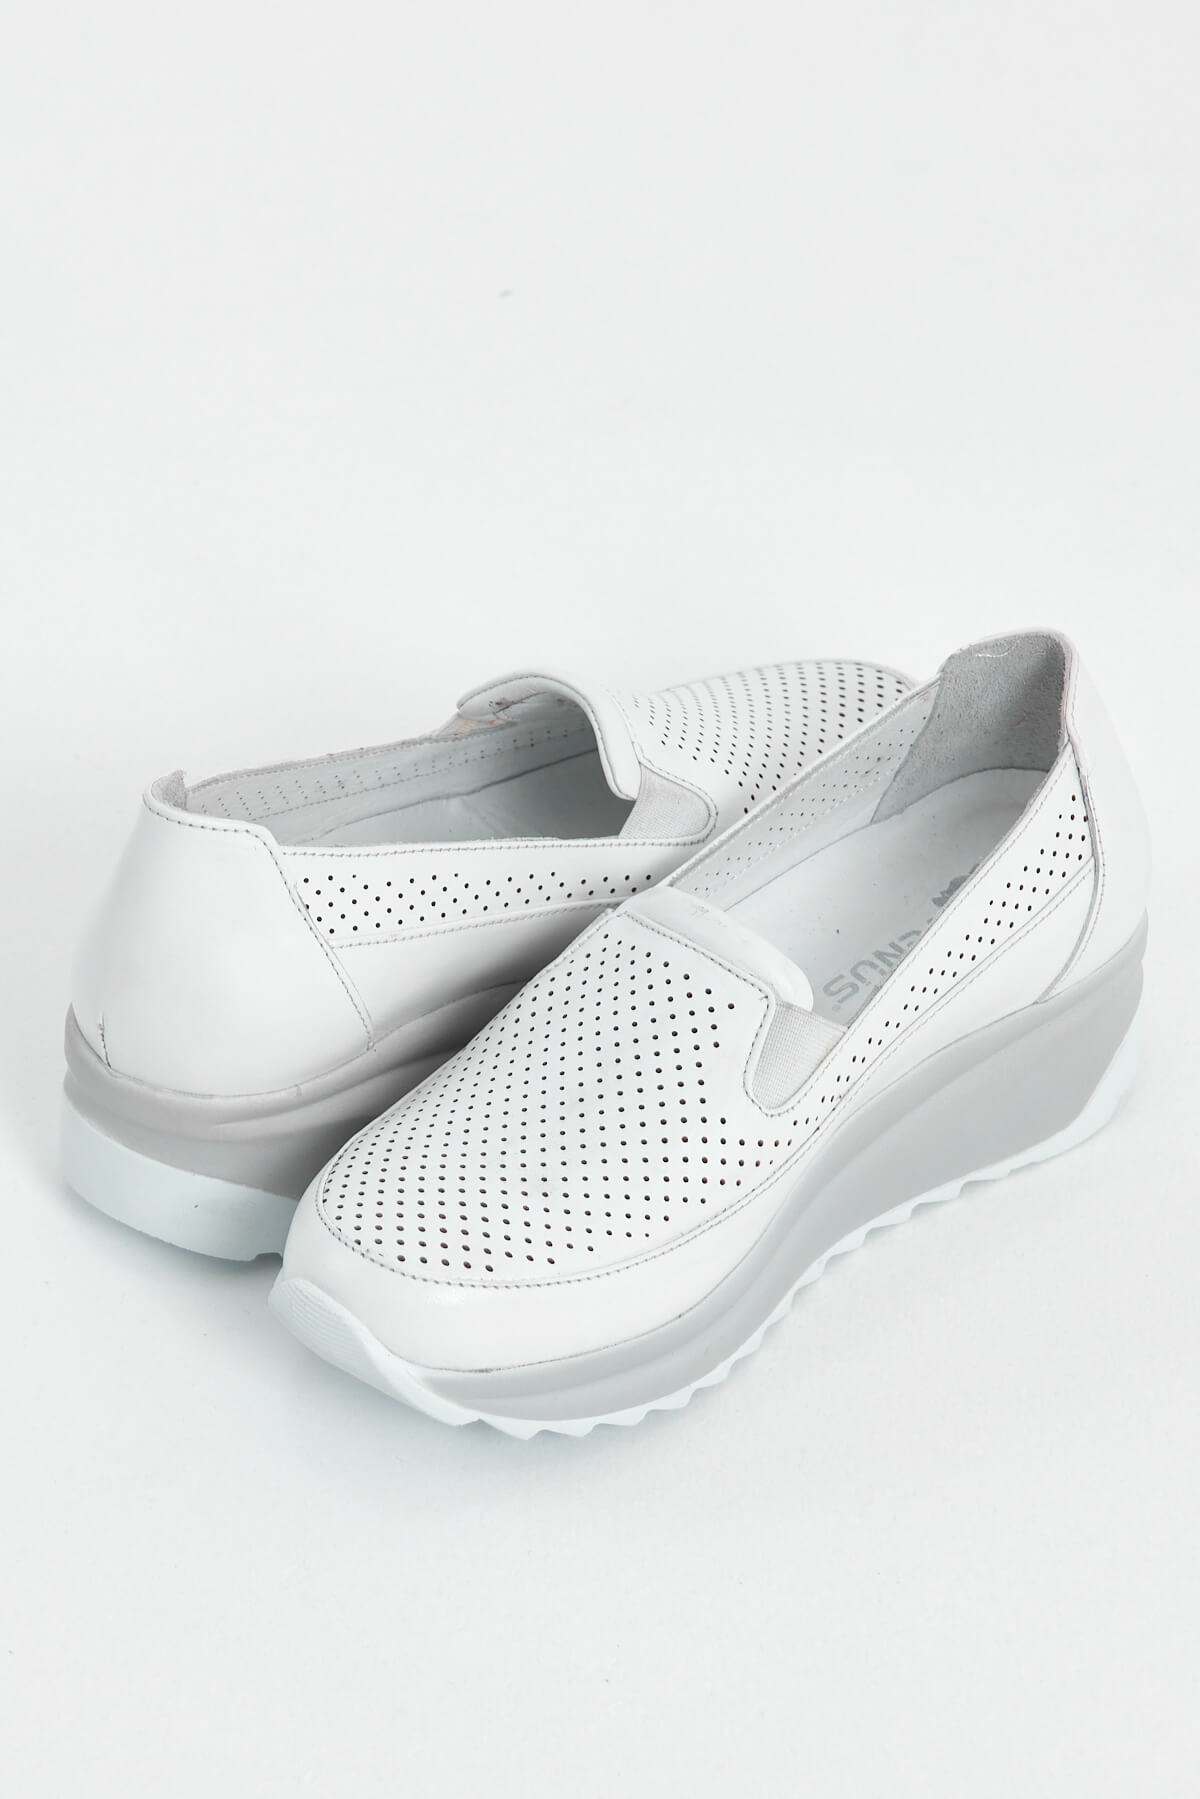 Kadın Dolgu Topuk Deri Sneakers Beyaz 2310302Y - Thumbnail